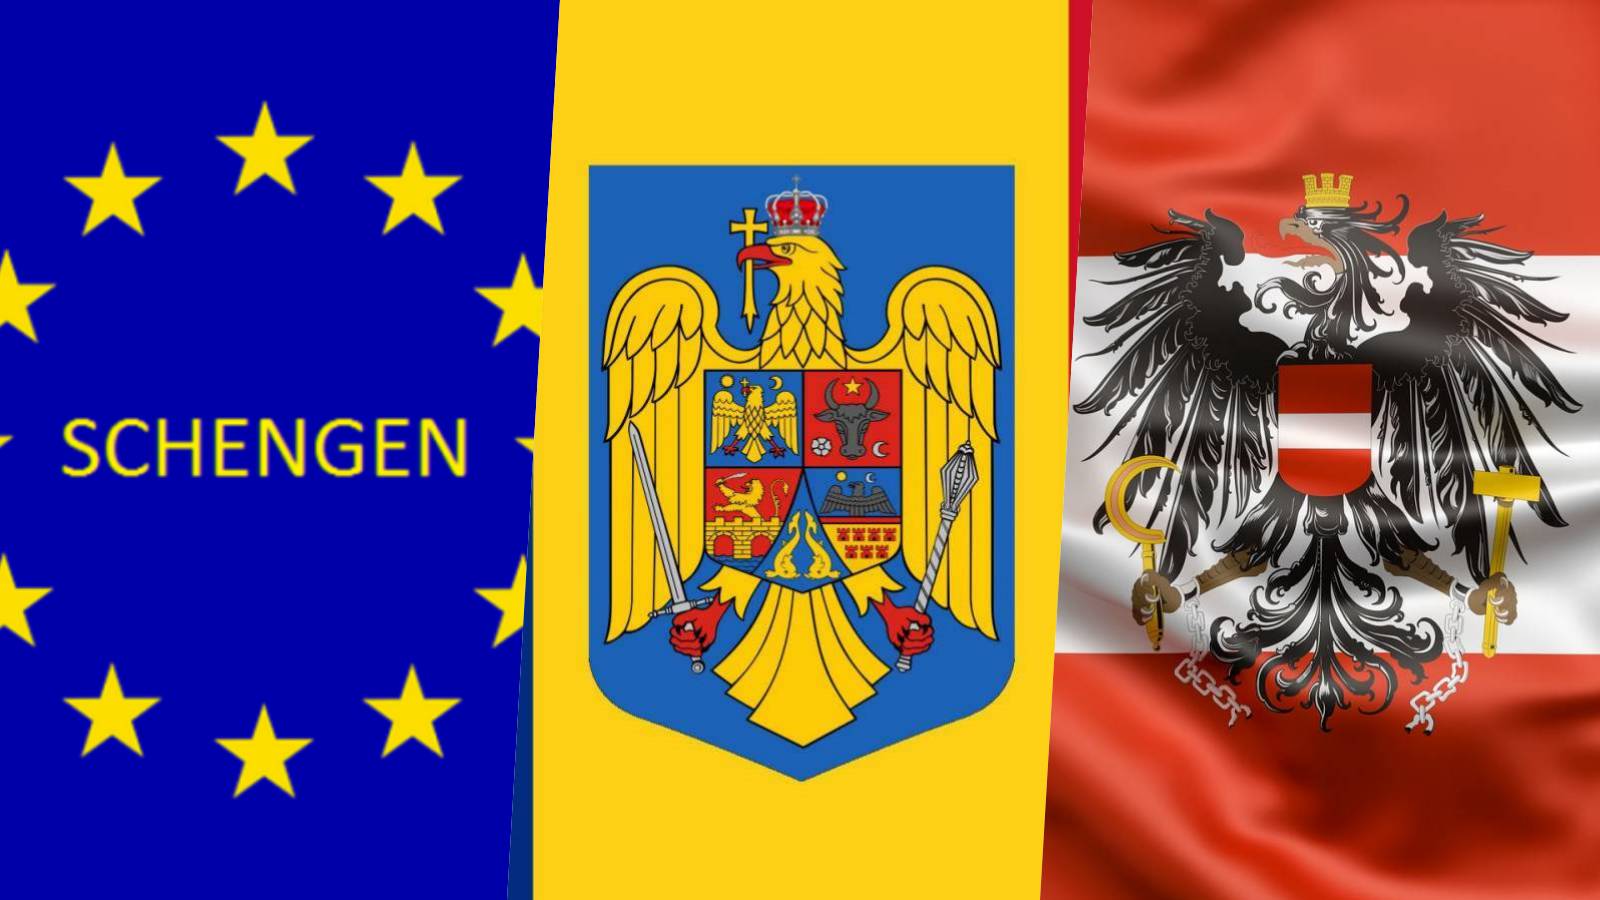 Confirmarile Oficiale Austriei ULTIM MOMENT Sustin Permiterea Finalizarii Aderarii Romaniei Schengen